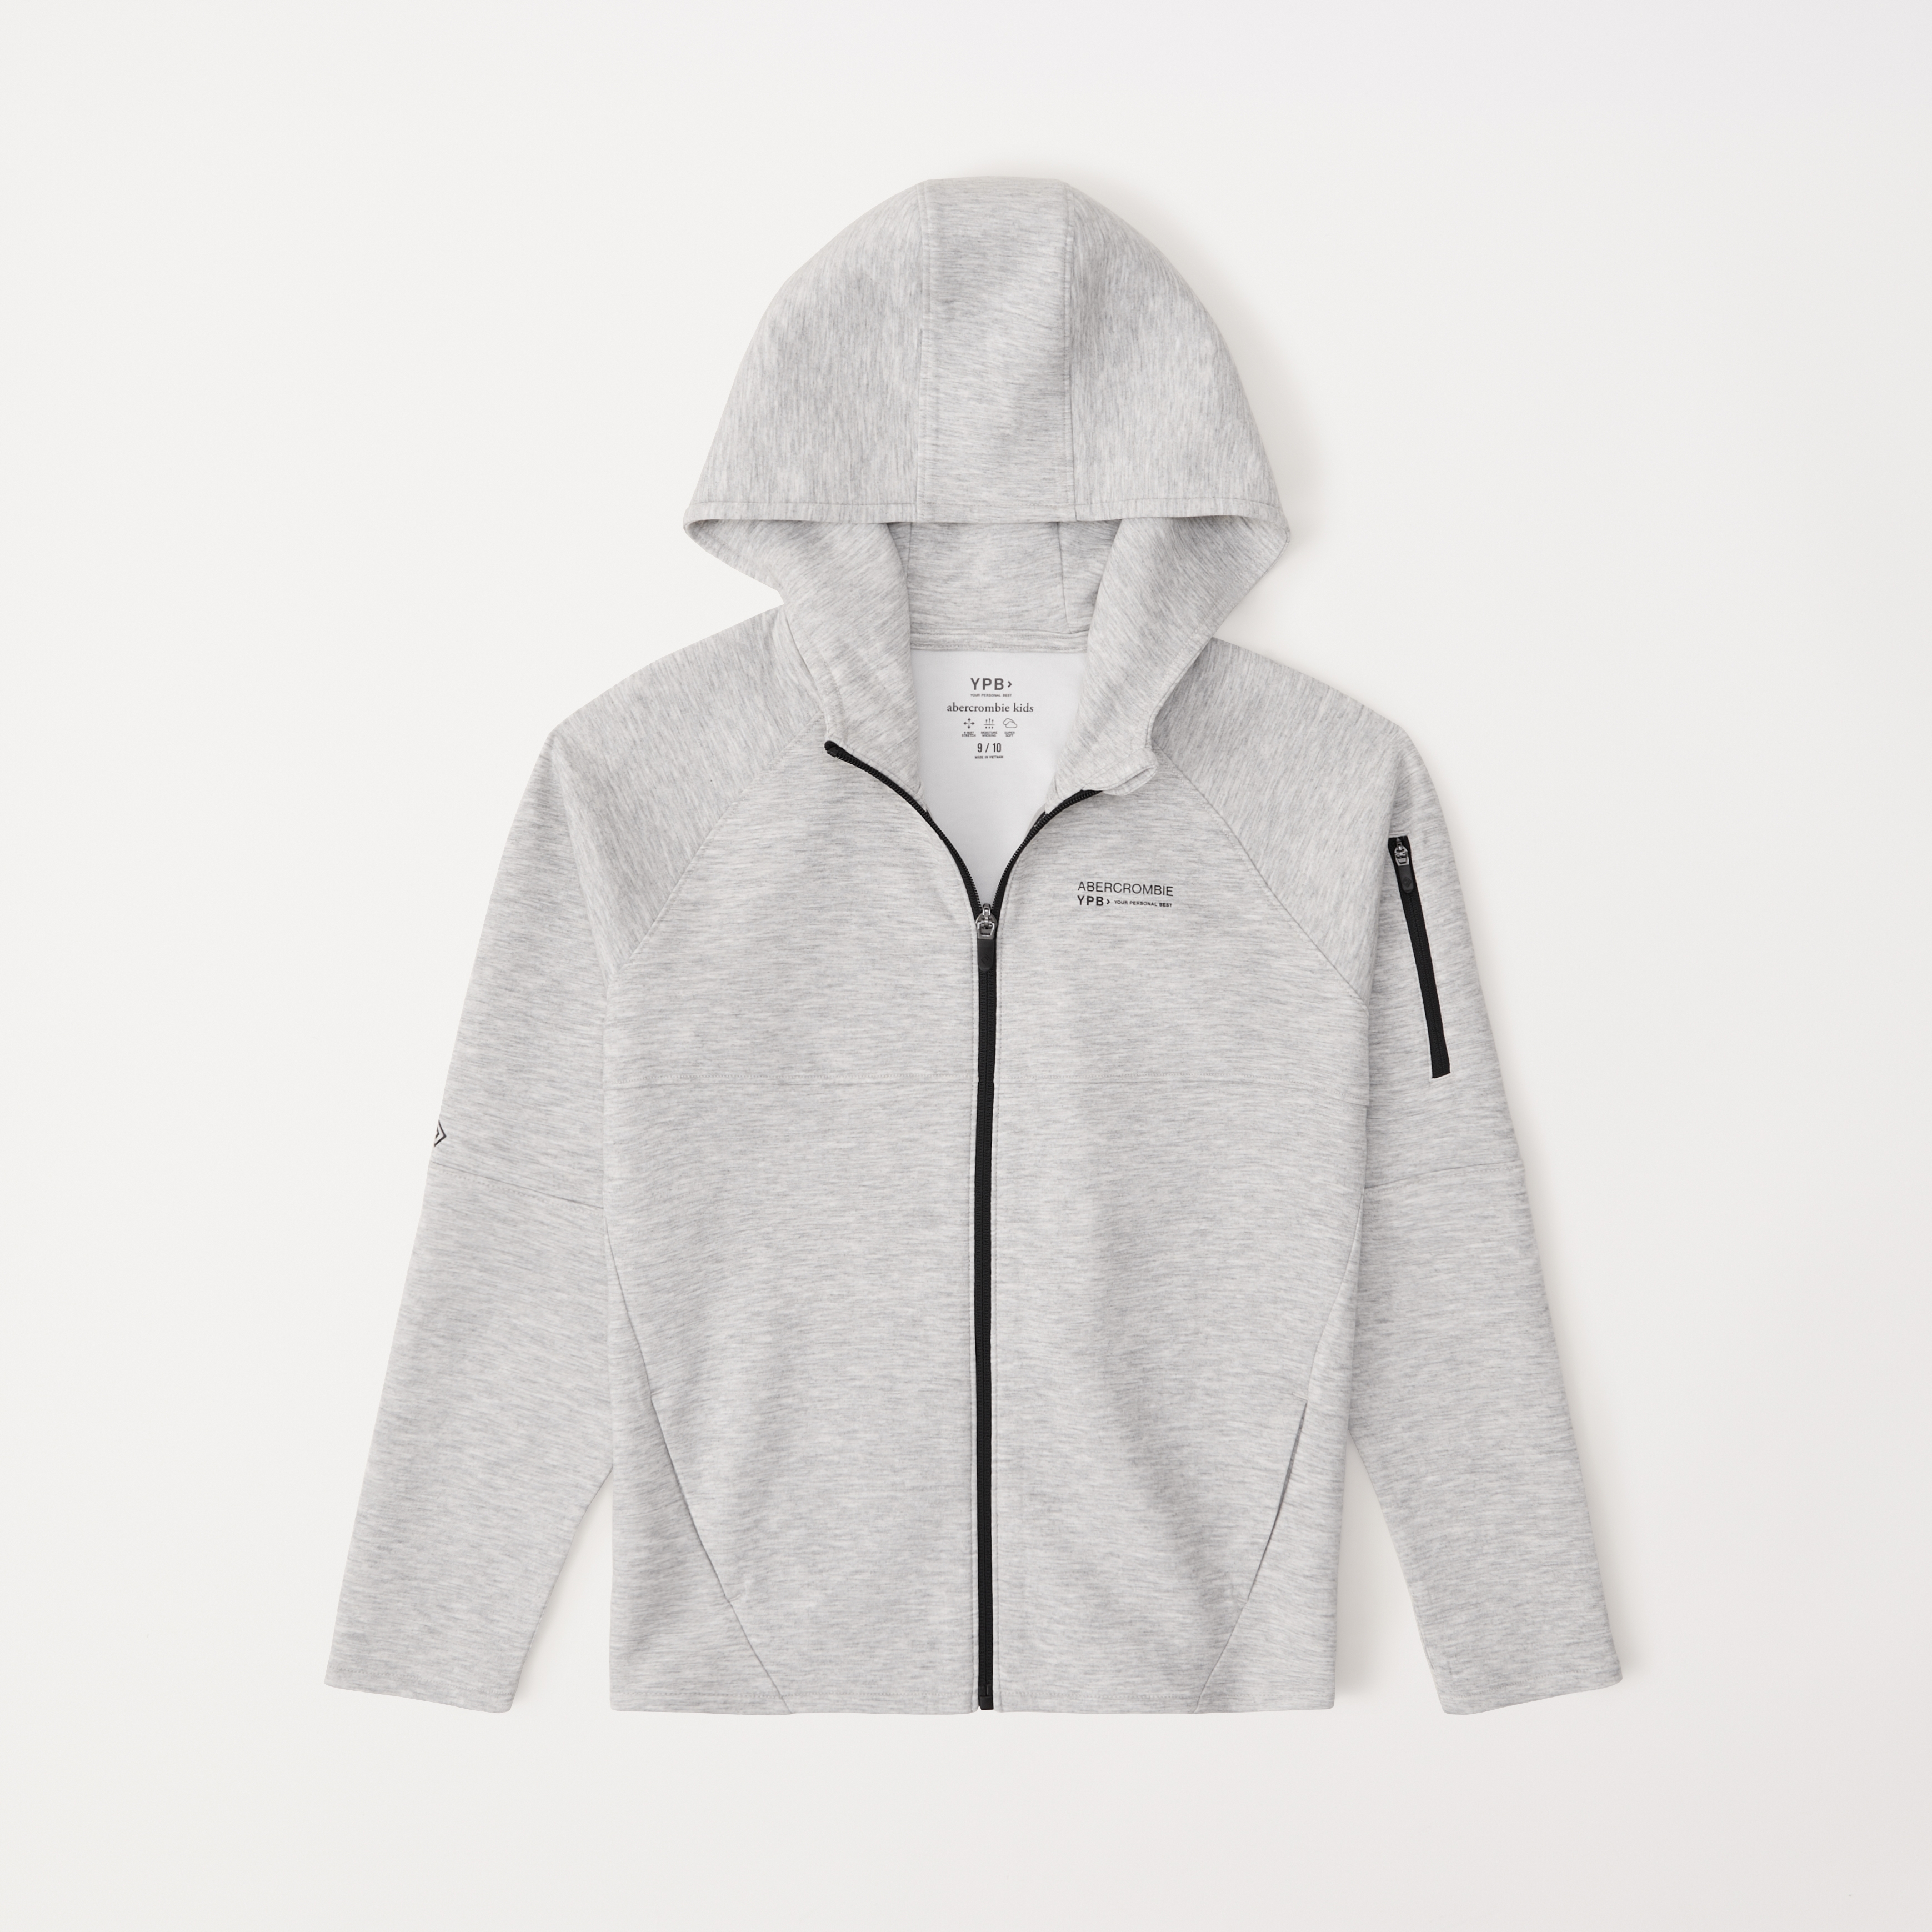 ypb neoknit active logo full-zip hoodie